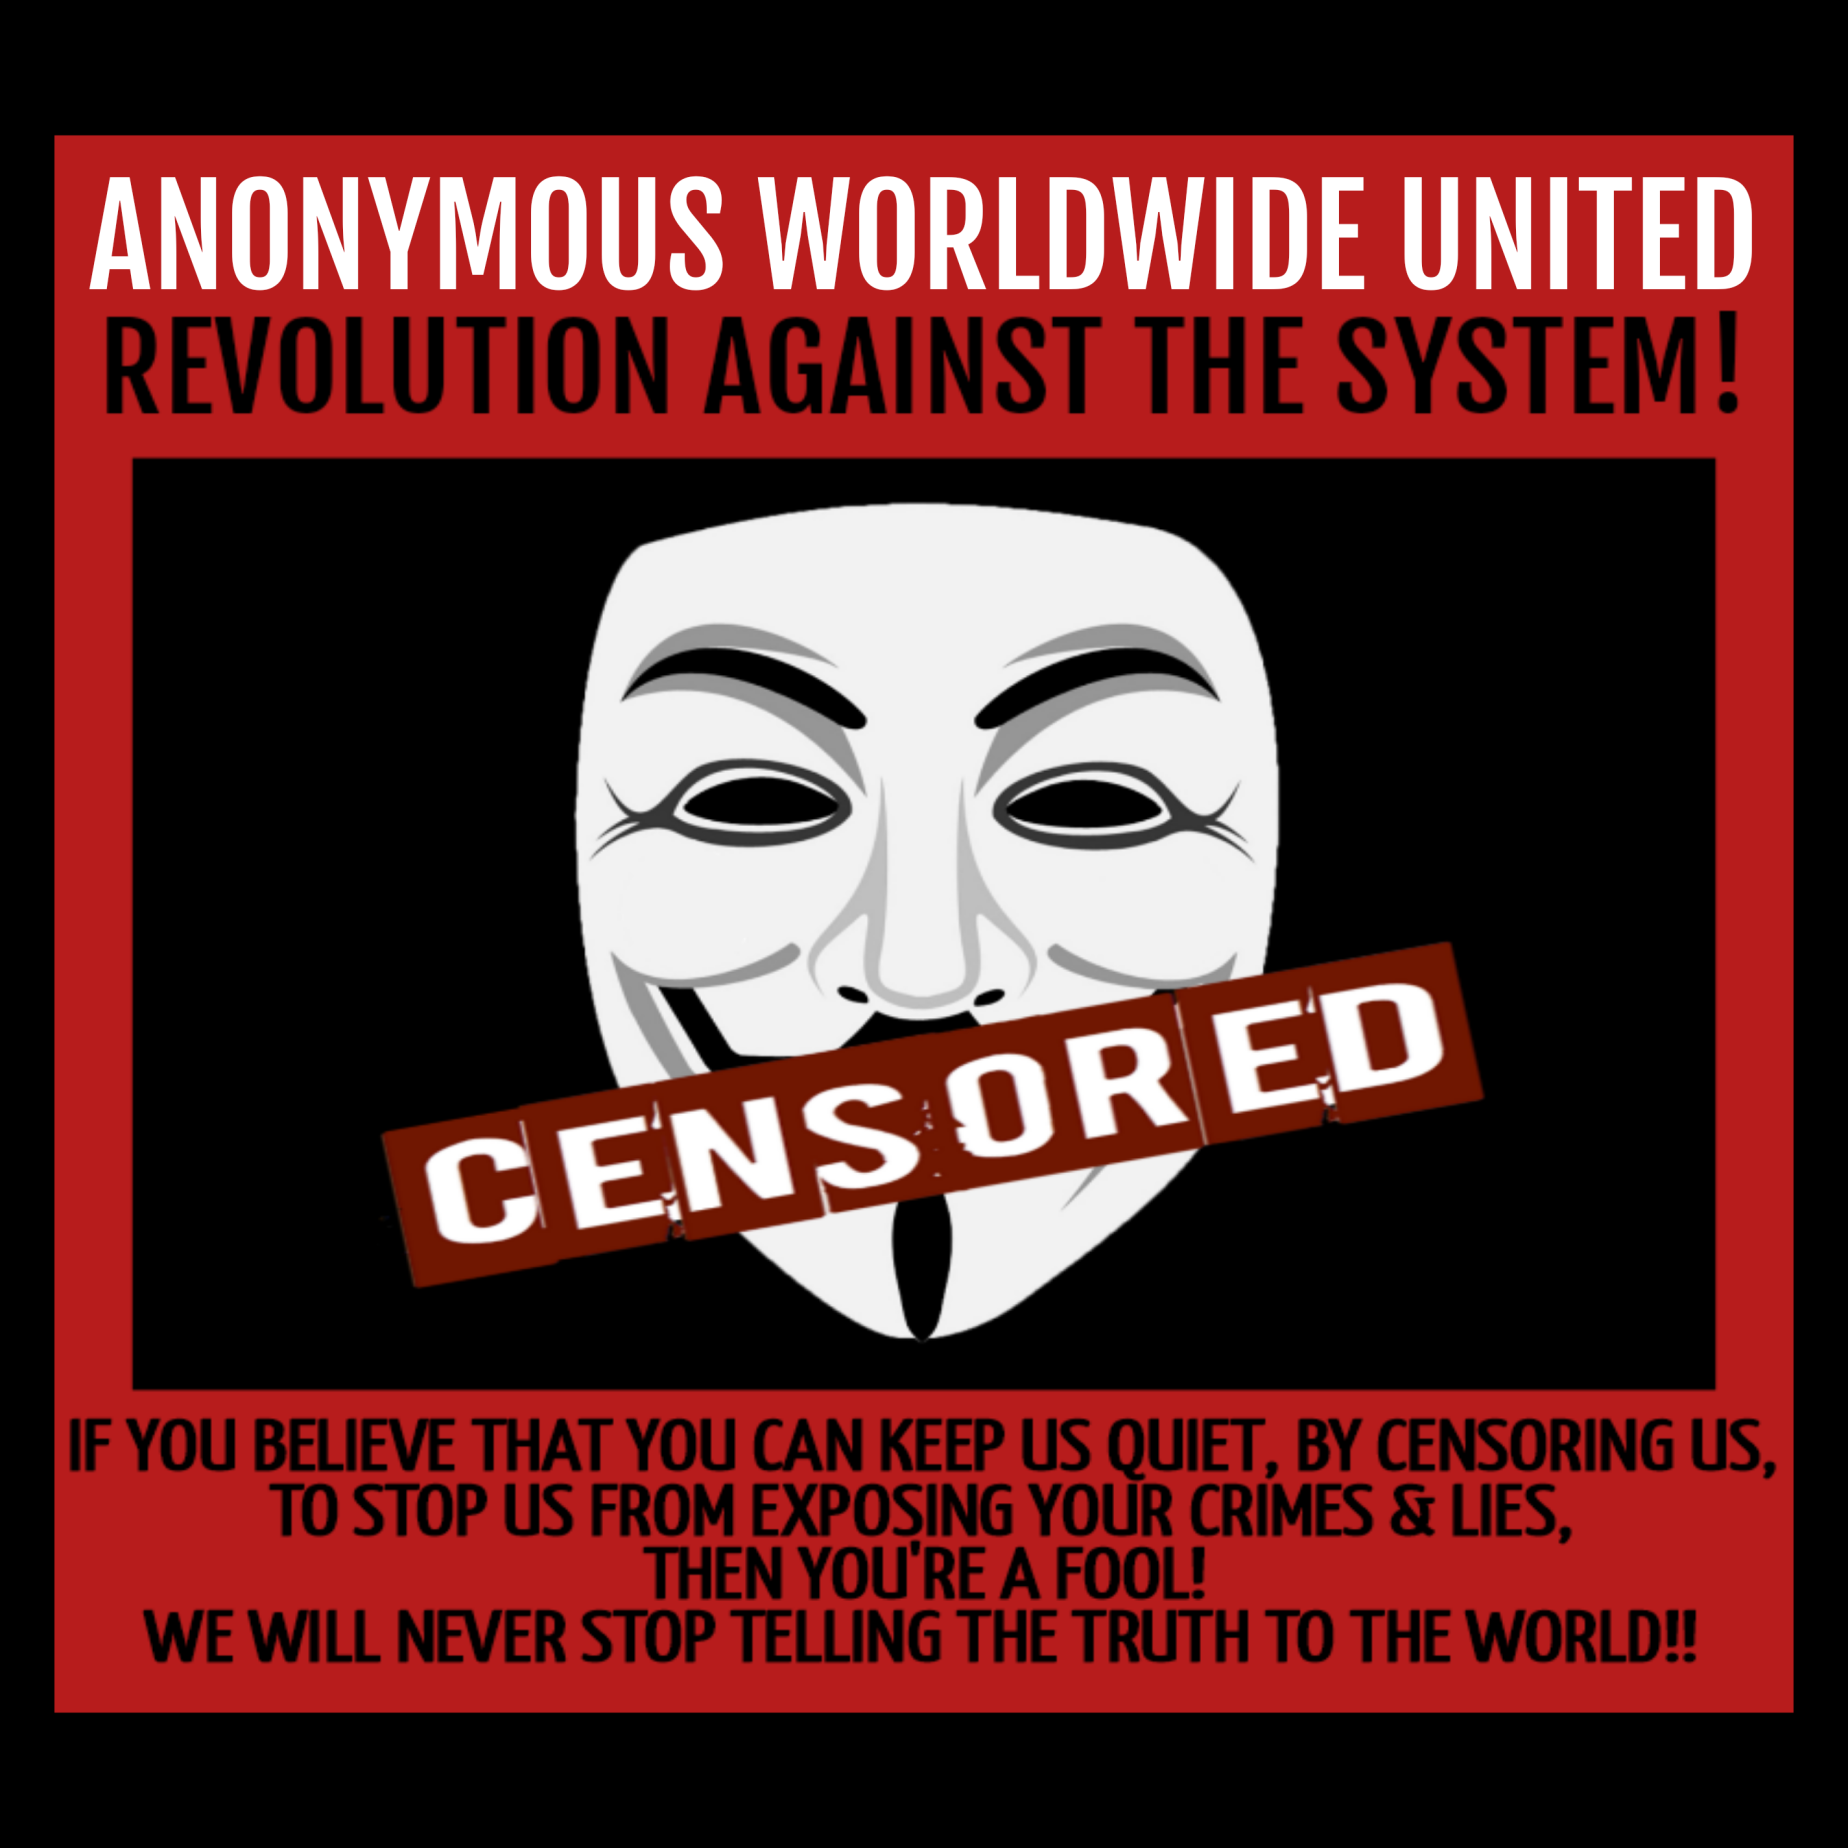 0_wallpaper_anonymous-worldwide-united-censored1